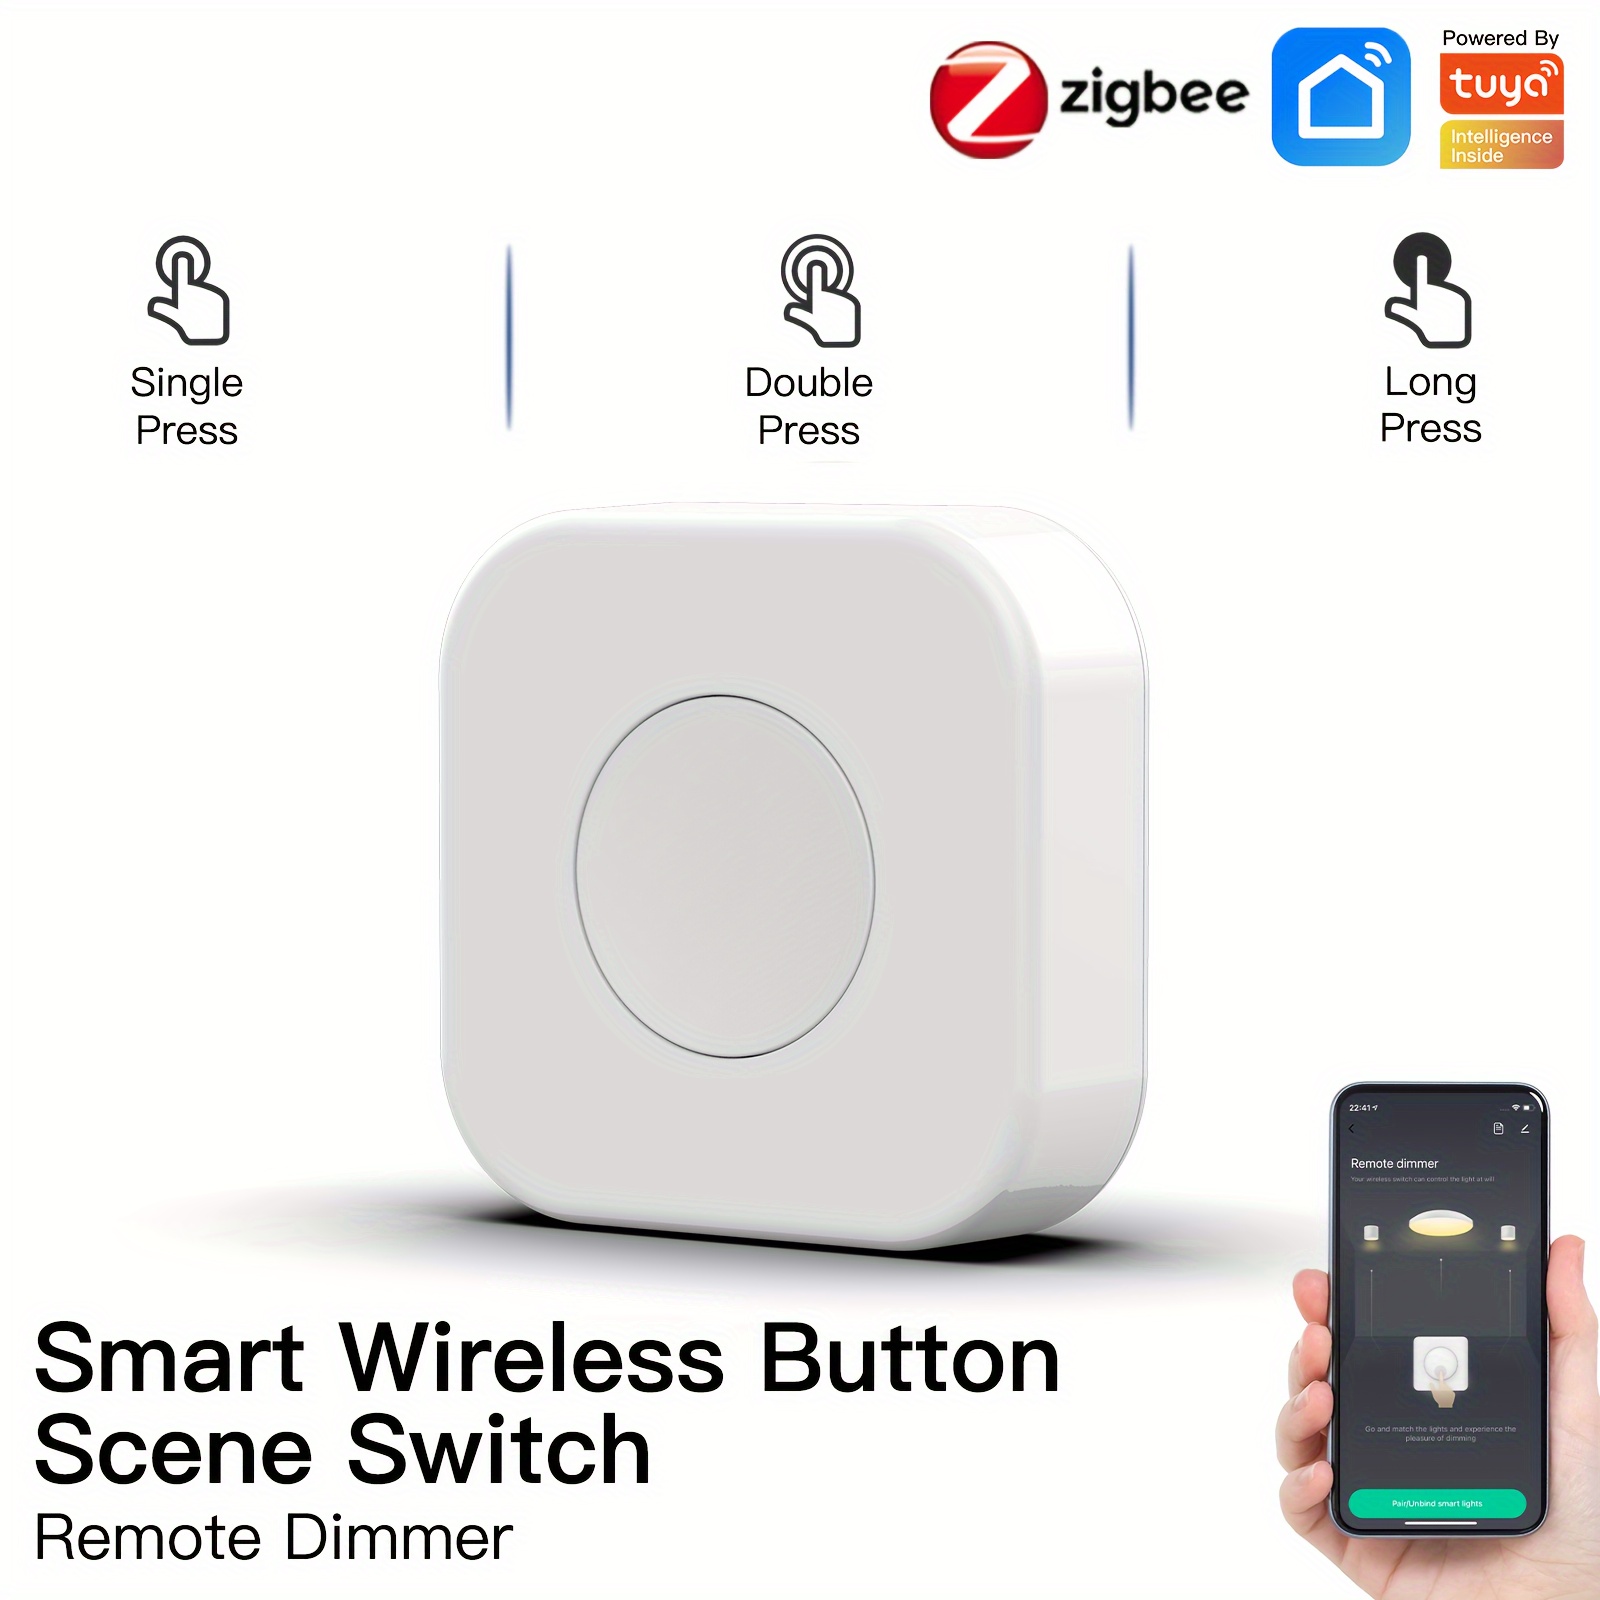 Loratap Tuya Smart Life Zigbee Wifi Light Switch Module Dimmer Energy  Monitor App Télécommande Alexa Google Home Contrôle vocal